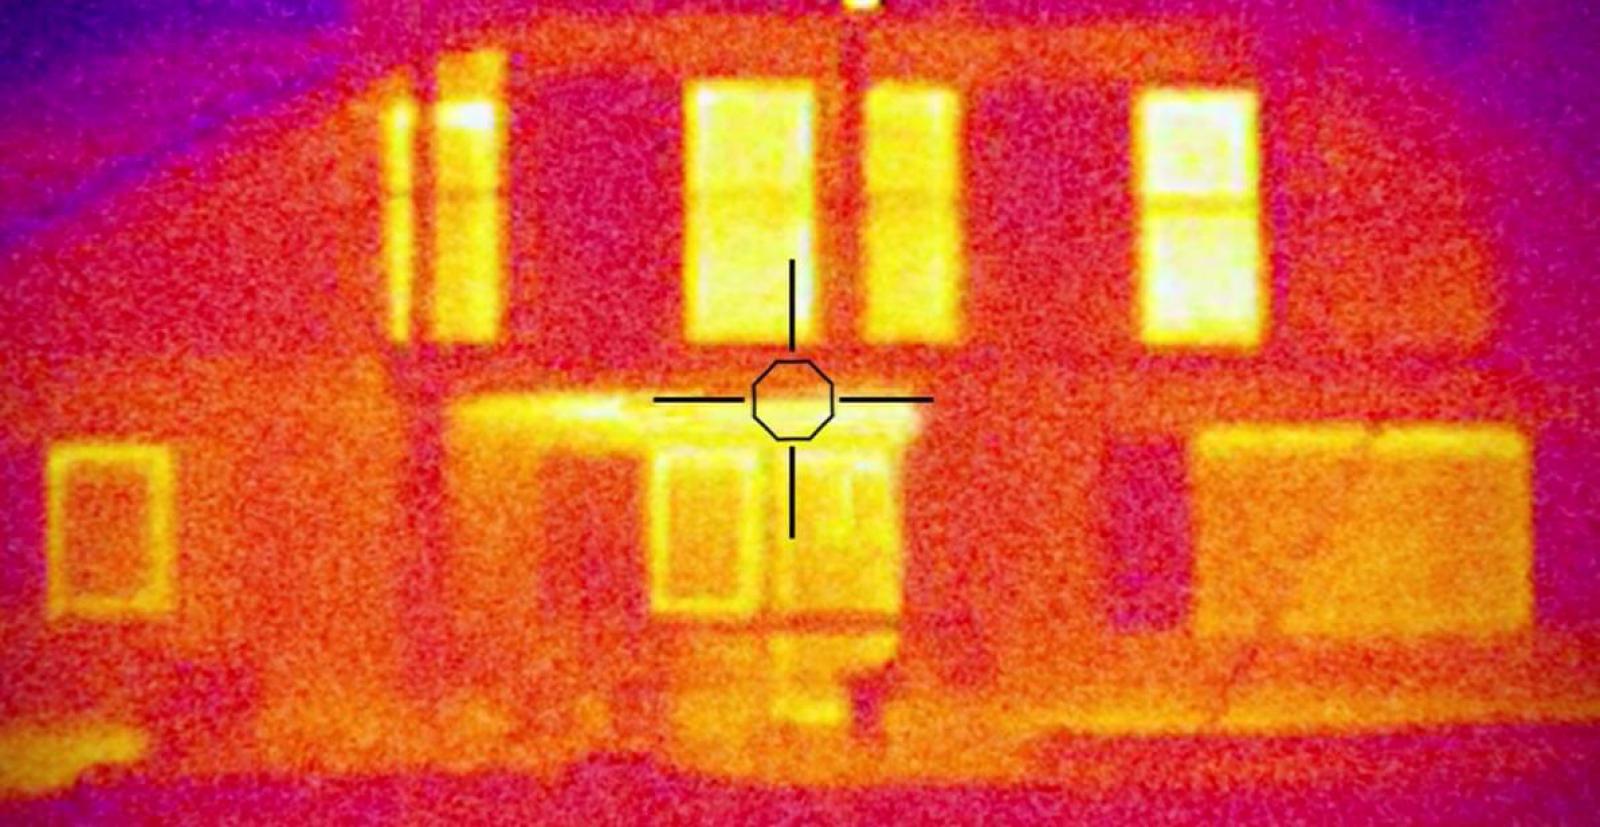 Wärmebildaufnahme eines Hauses